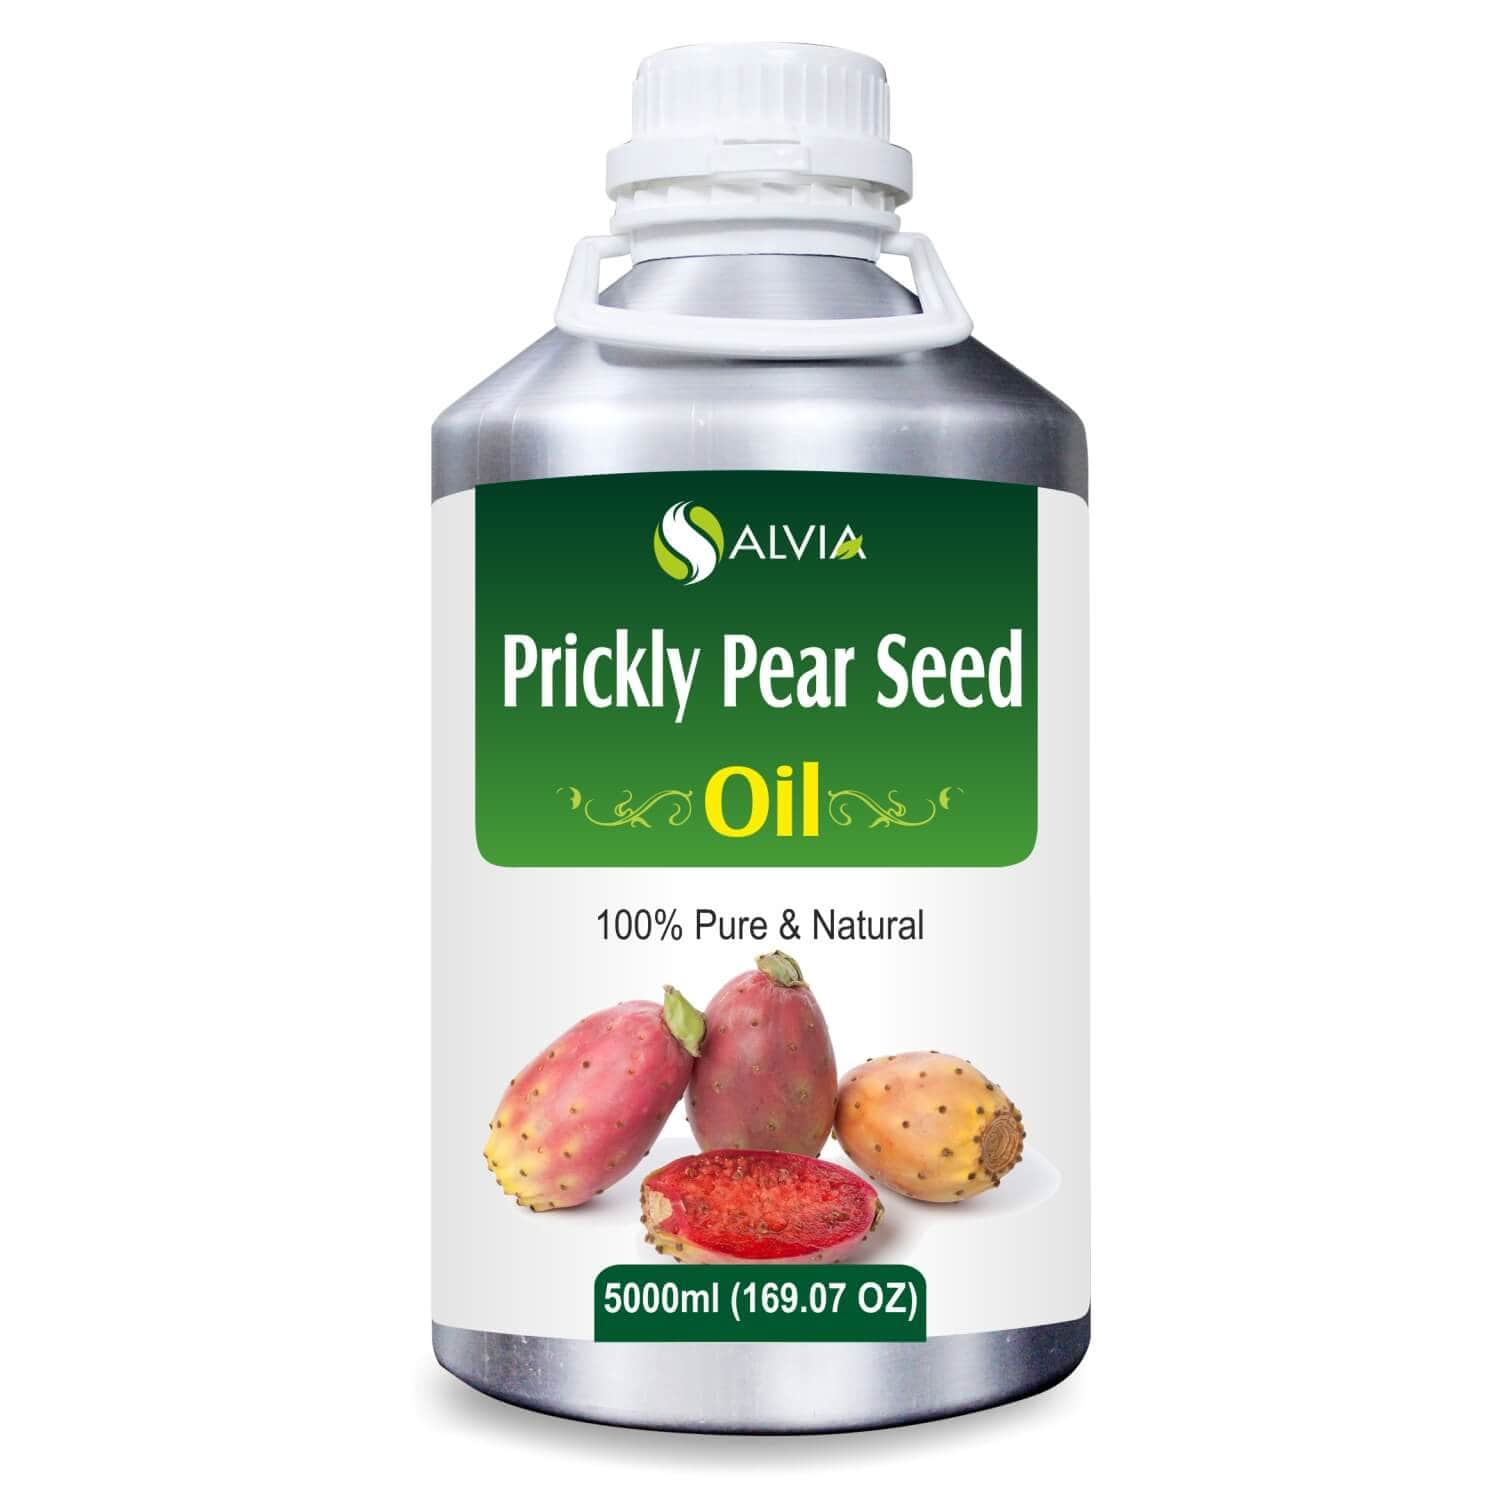 Prickly Pear Oil — Wholesale Botanics